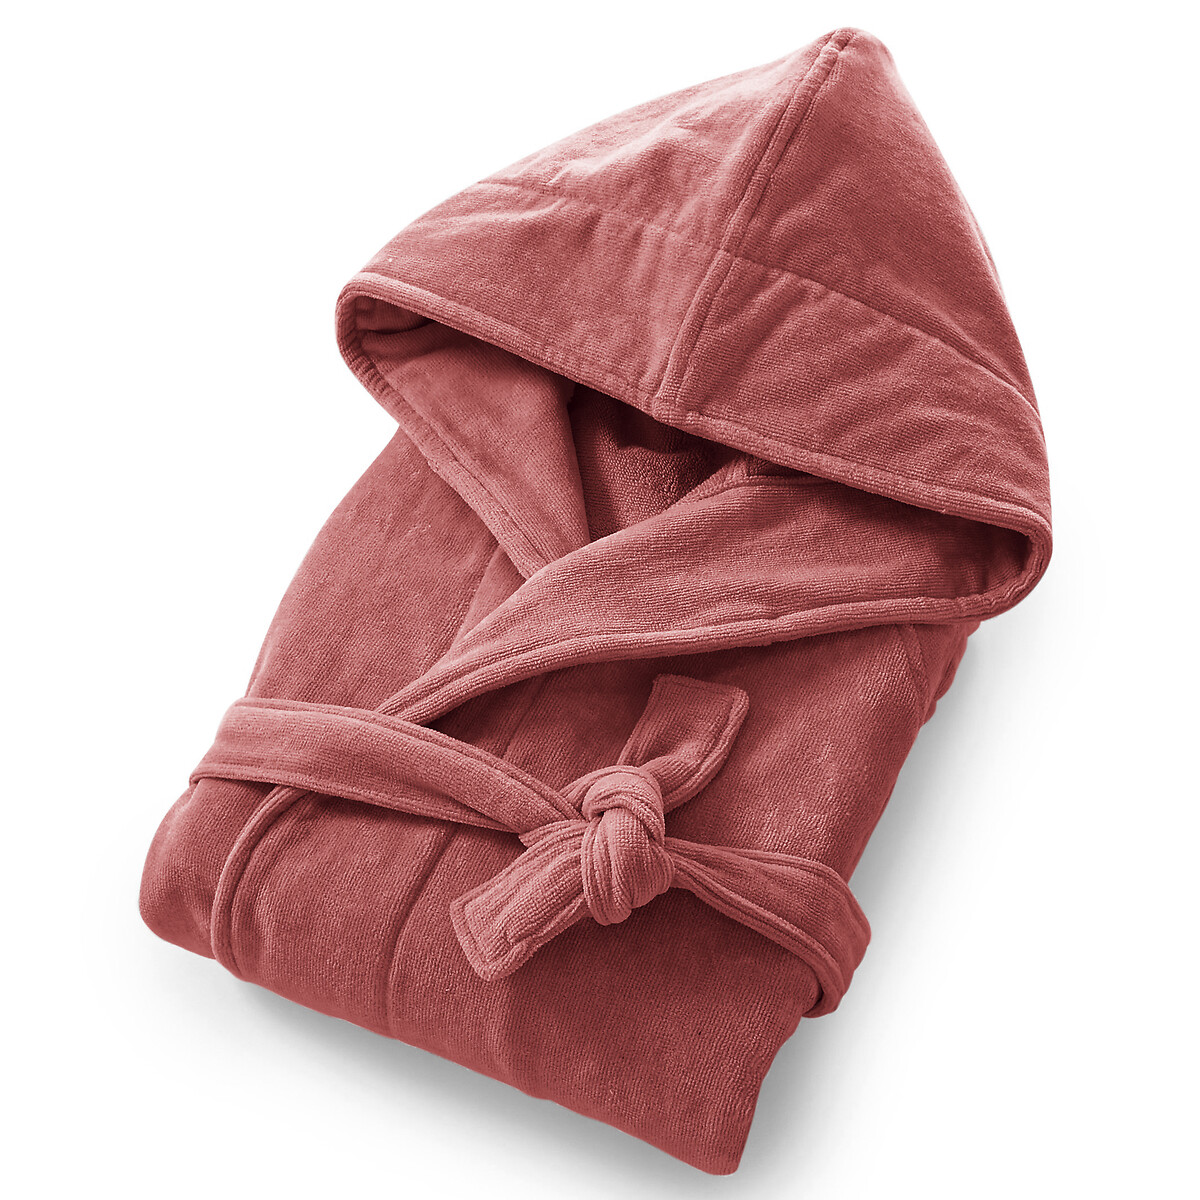 Халат махровая велюровая ткань 450 гм качество Best 46/48 (FR) - 52/54 (RUS) розовый велюровая пижама 46 48 fr 52 54 rus розовый